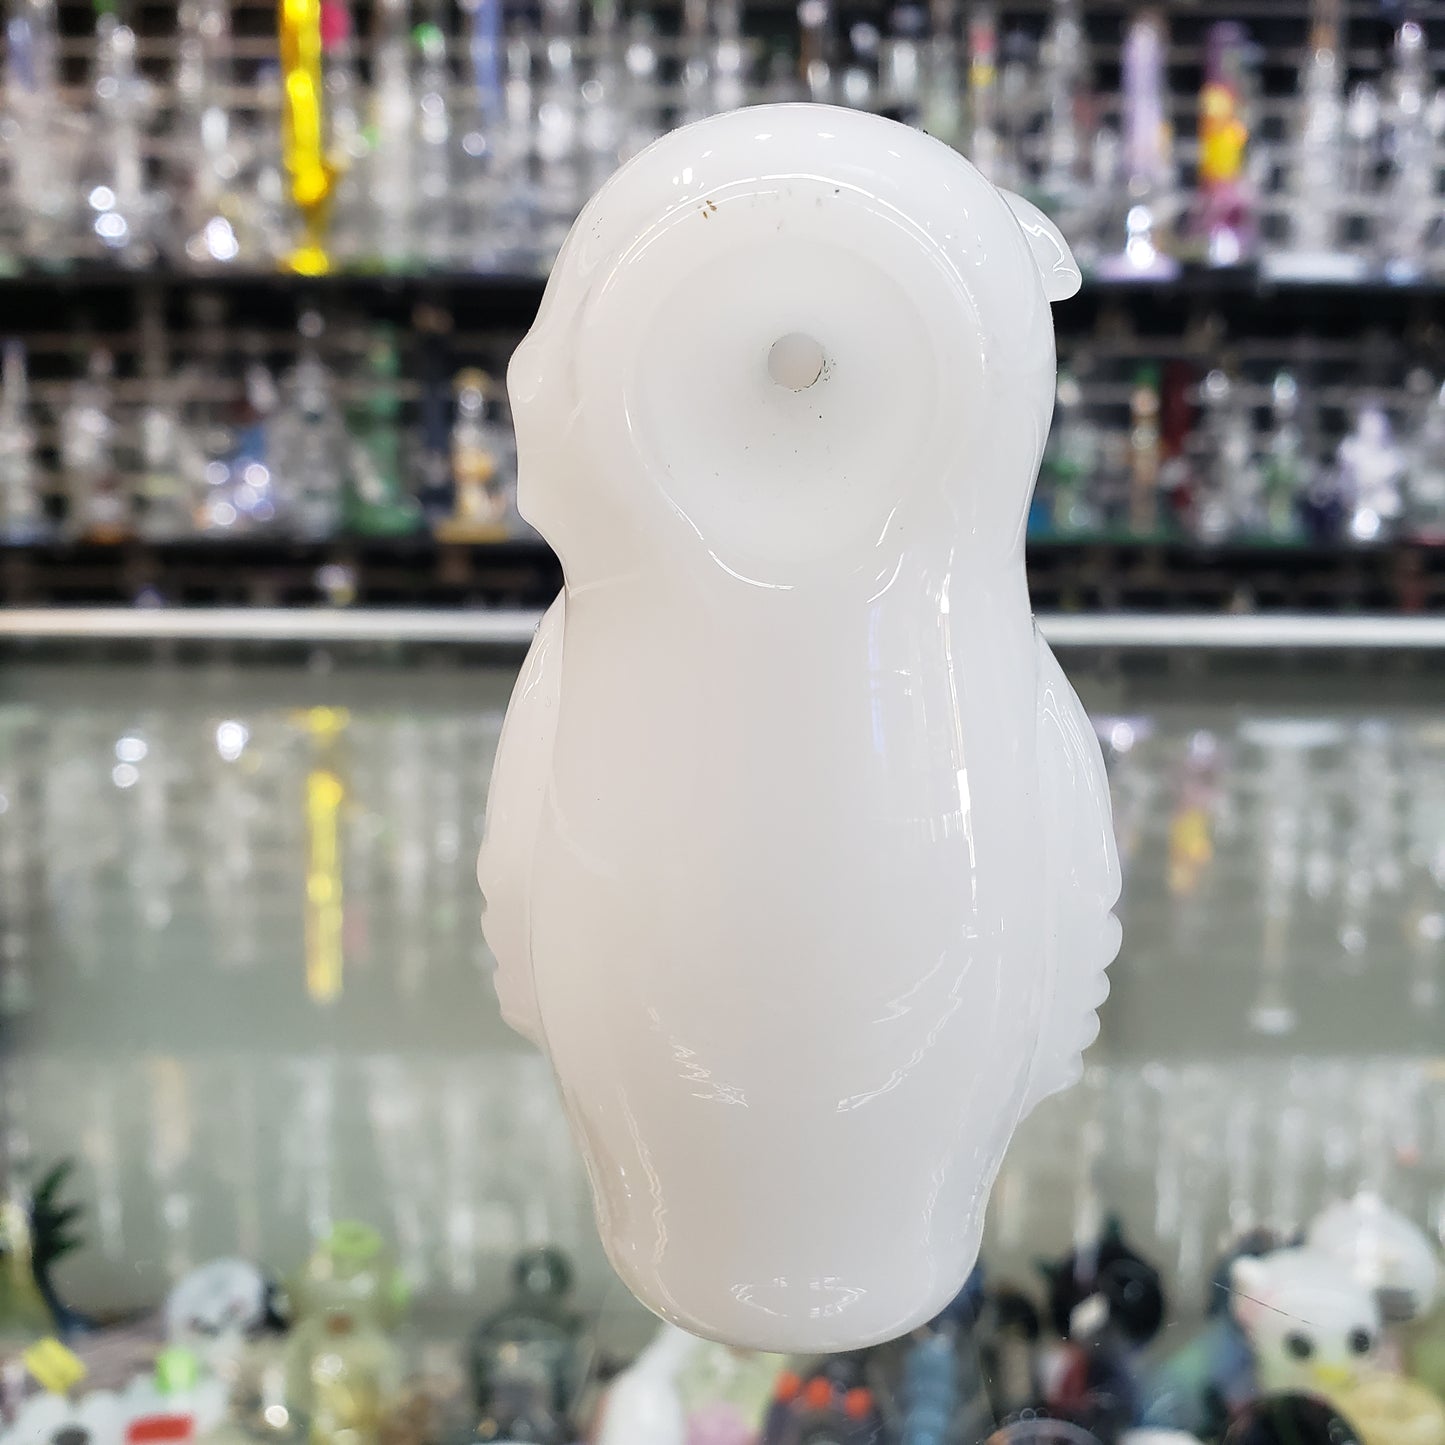 The white night owl pipe